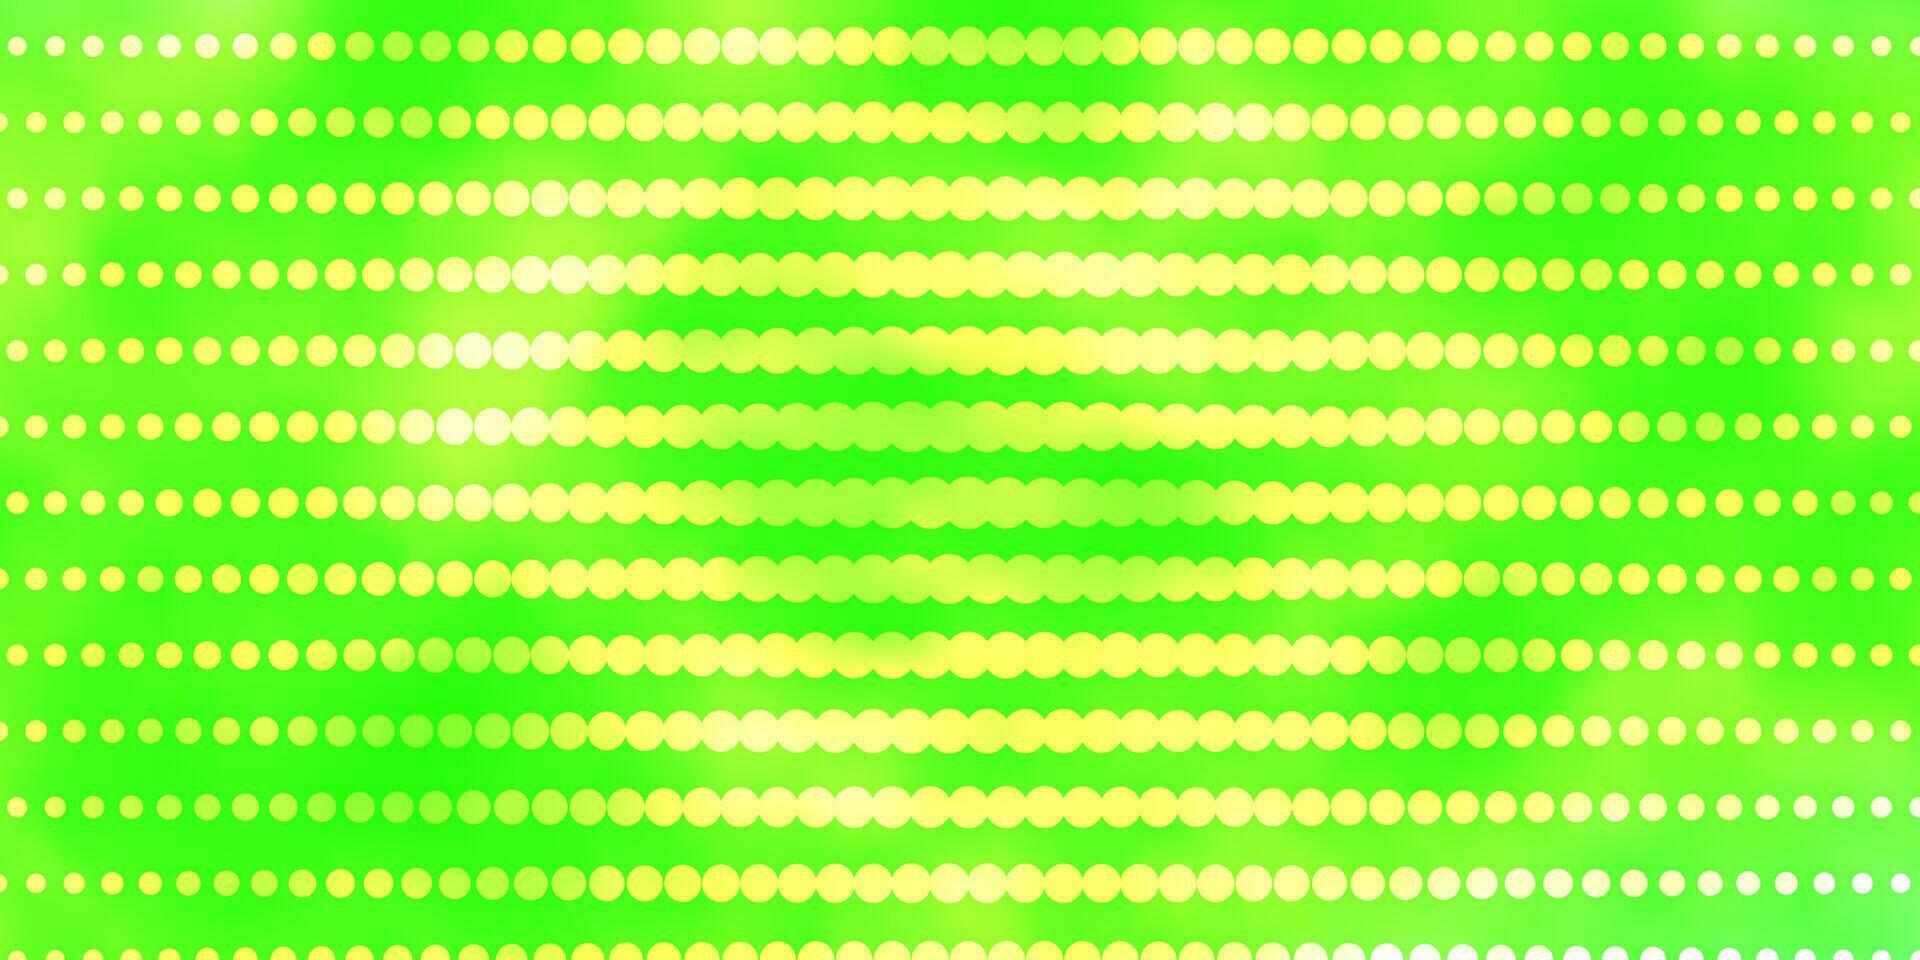 modelo de vetor verde claro com círculos.